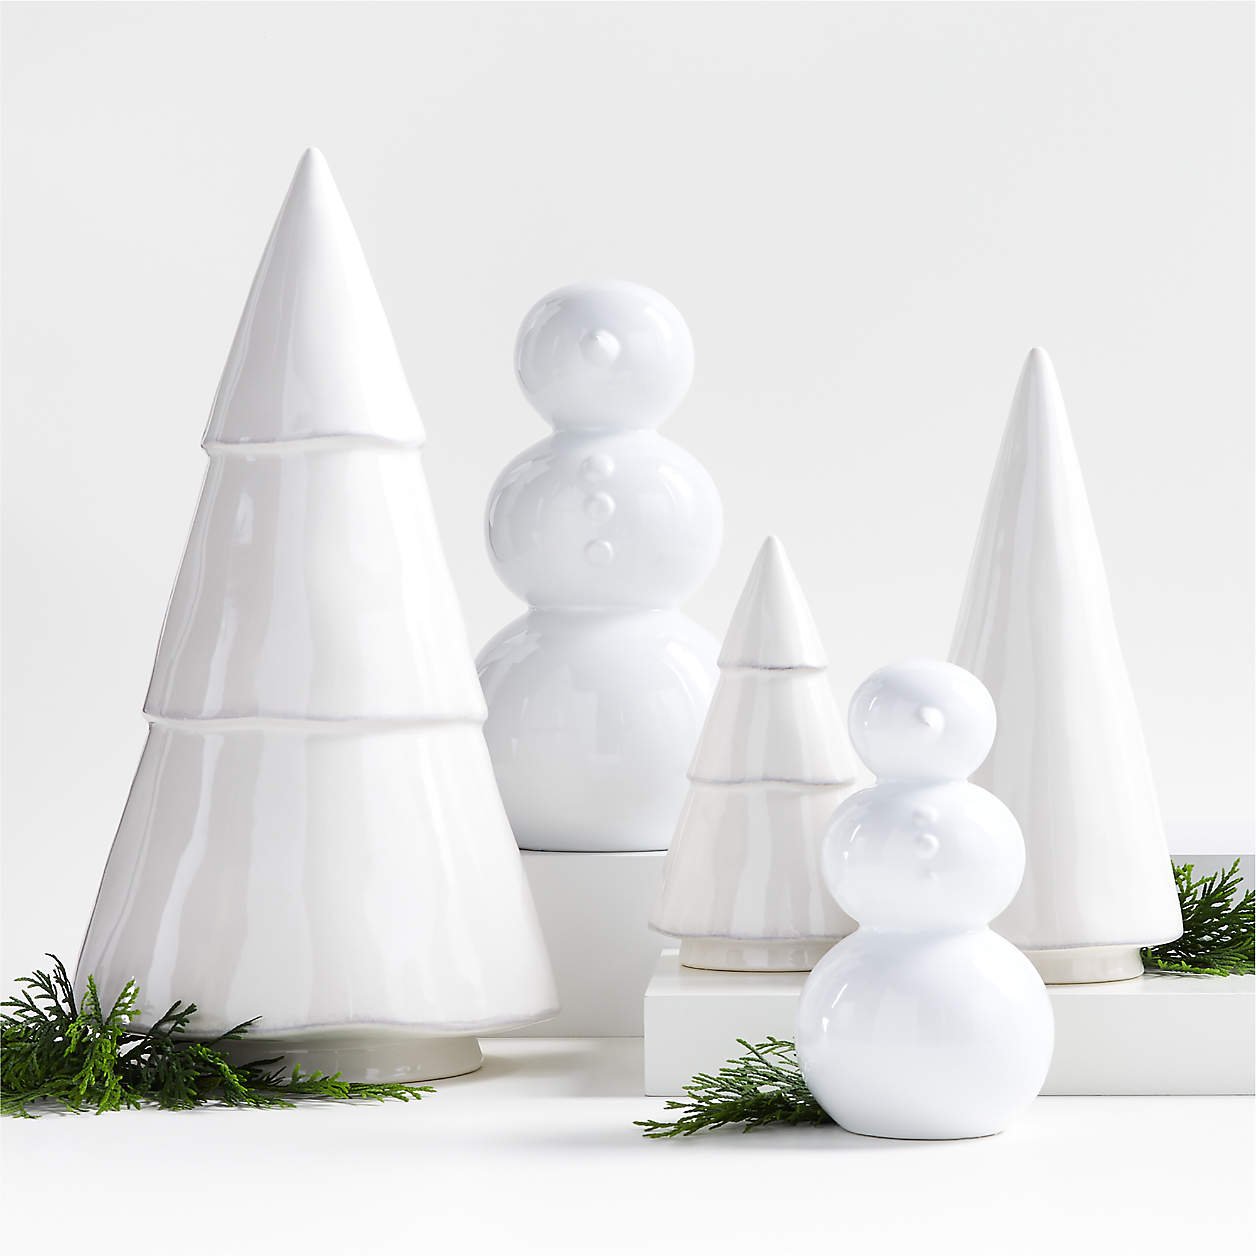 white-ceramic-winter-decor-arrangement.jpg